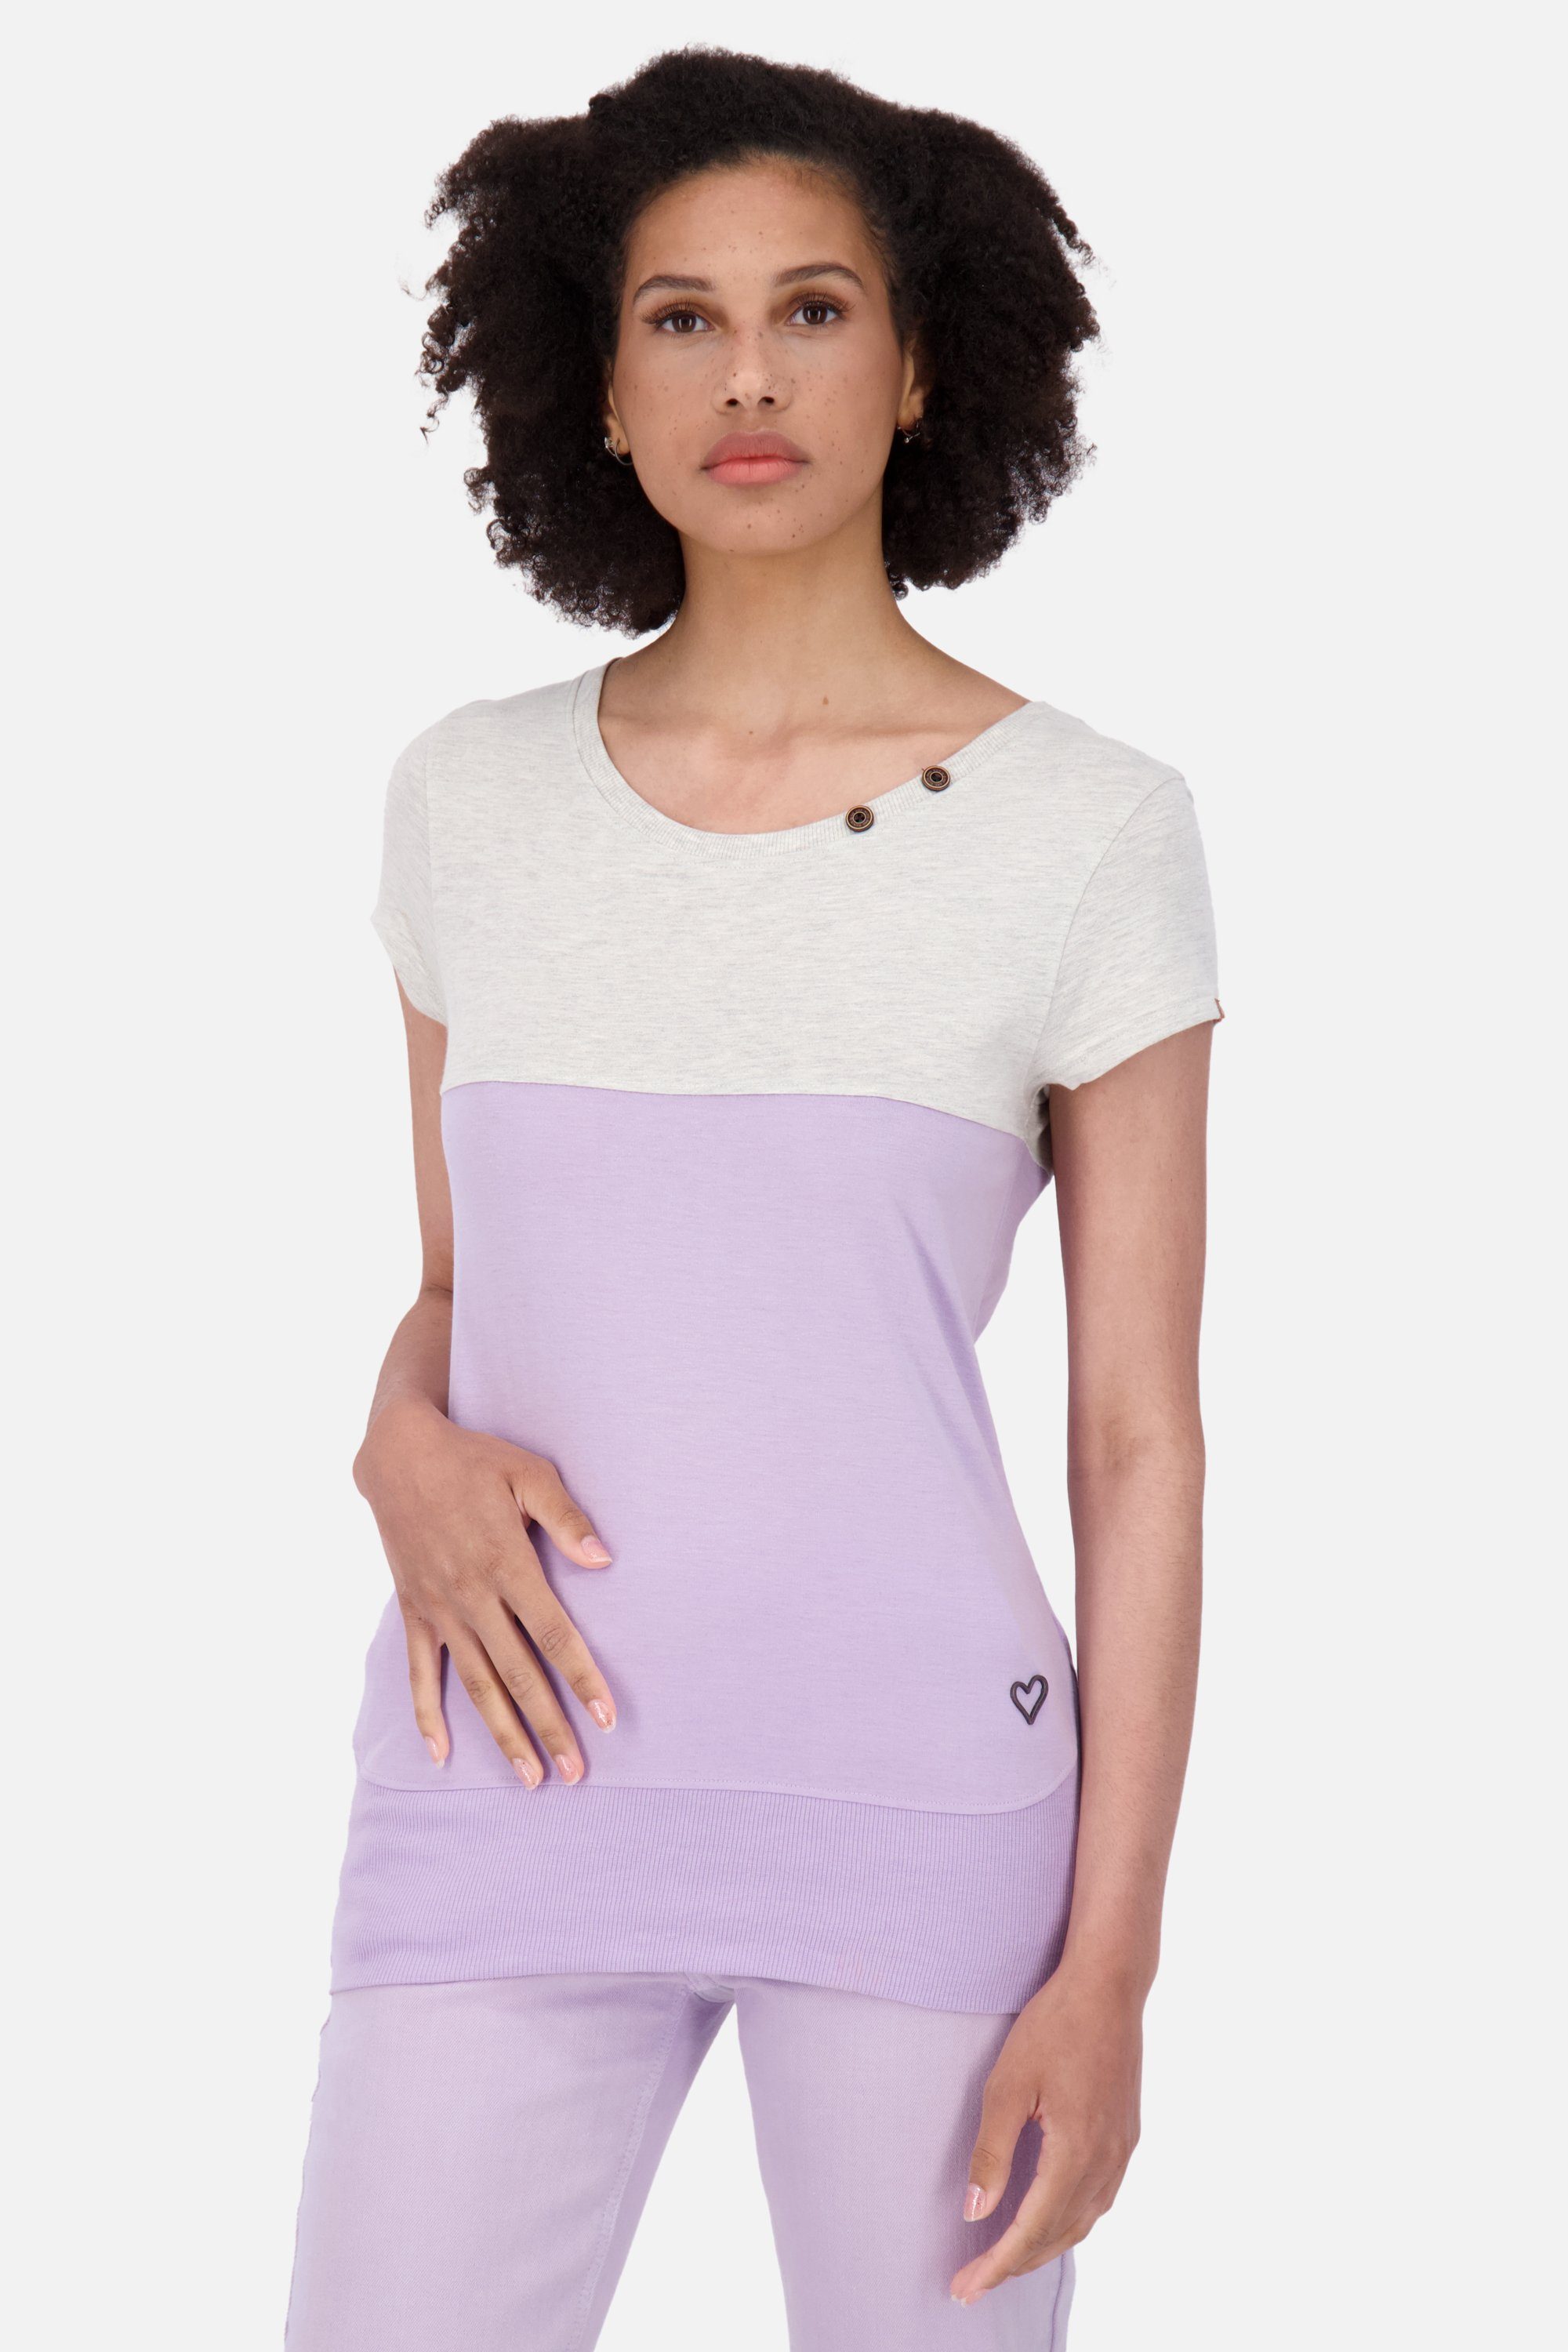 Alife & melange A Shirt Damen Rundhalsshirt Kurzarmshirt, lavender Shirt digital CoraAK Kickin